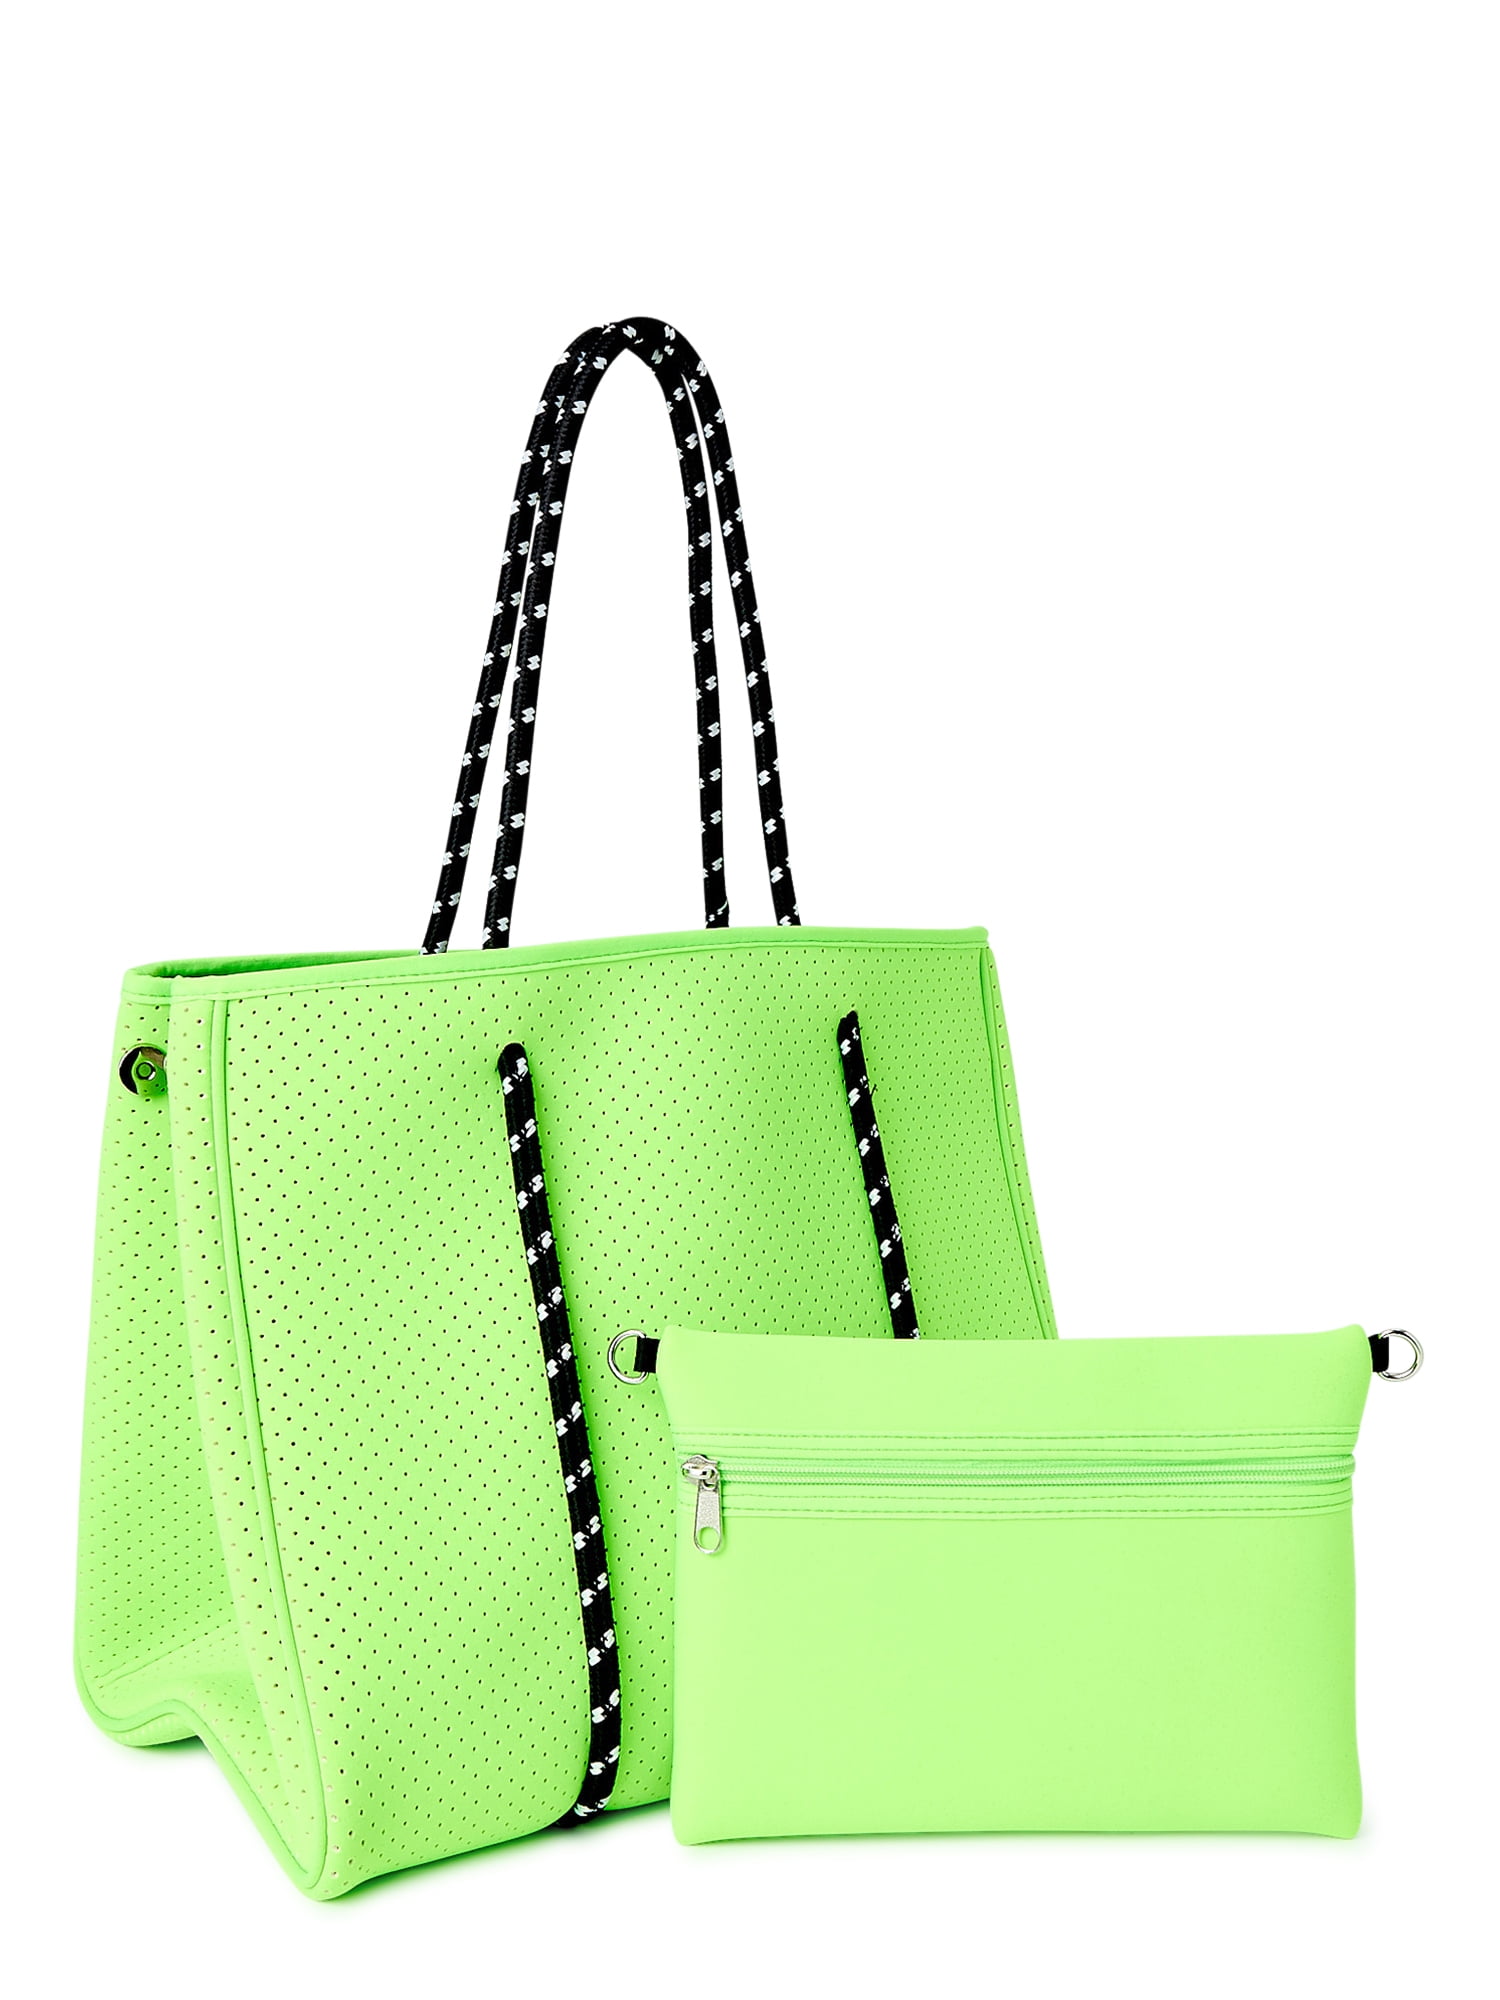 Green with Pink Stripe Neoprene Tote Bag - Pressed to Impress, LLC